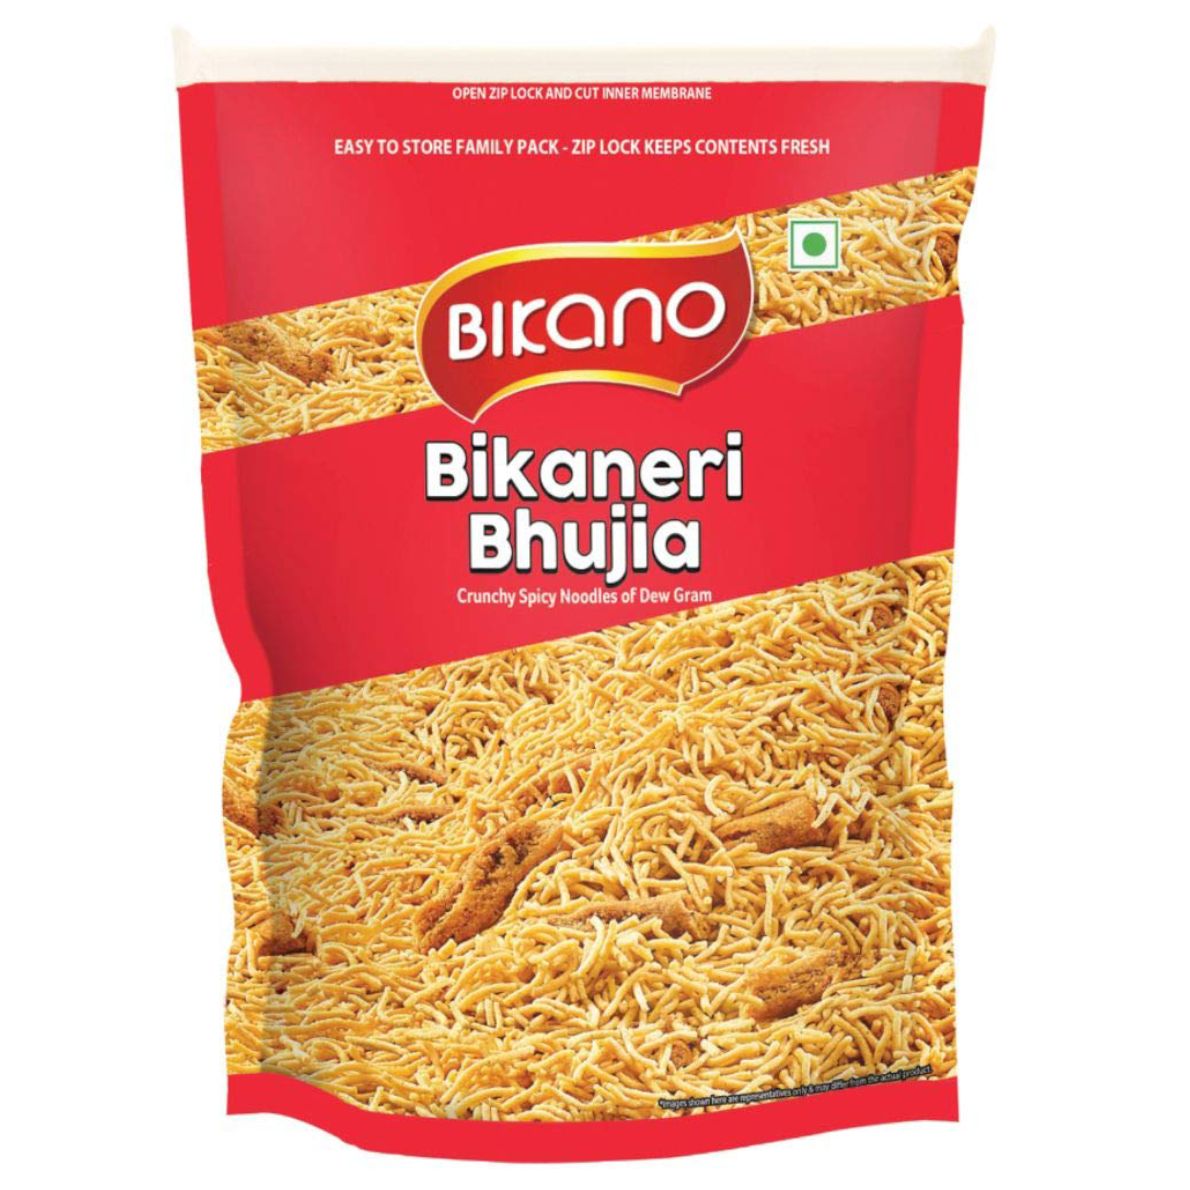 Bikano Bikaneri Bhujia 400g - ขนมทานเล่น